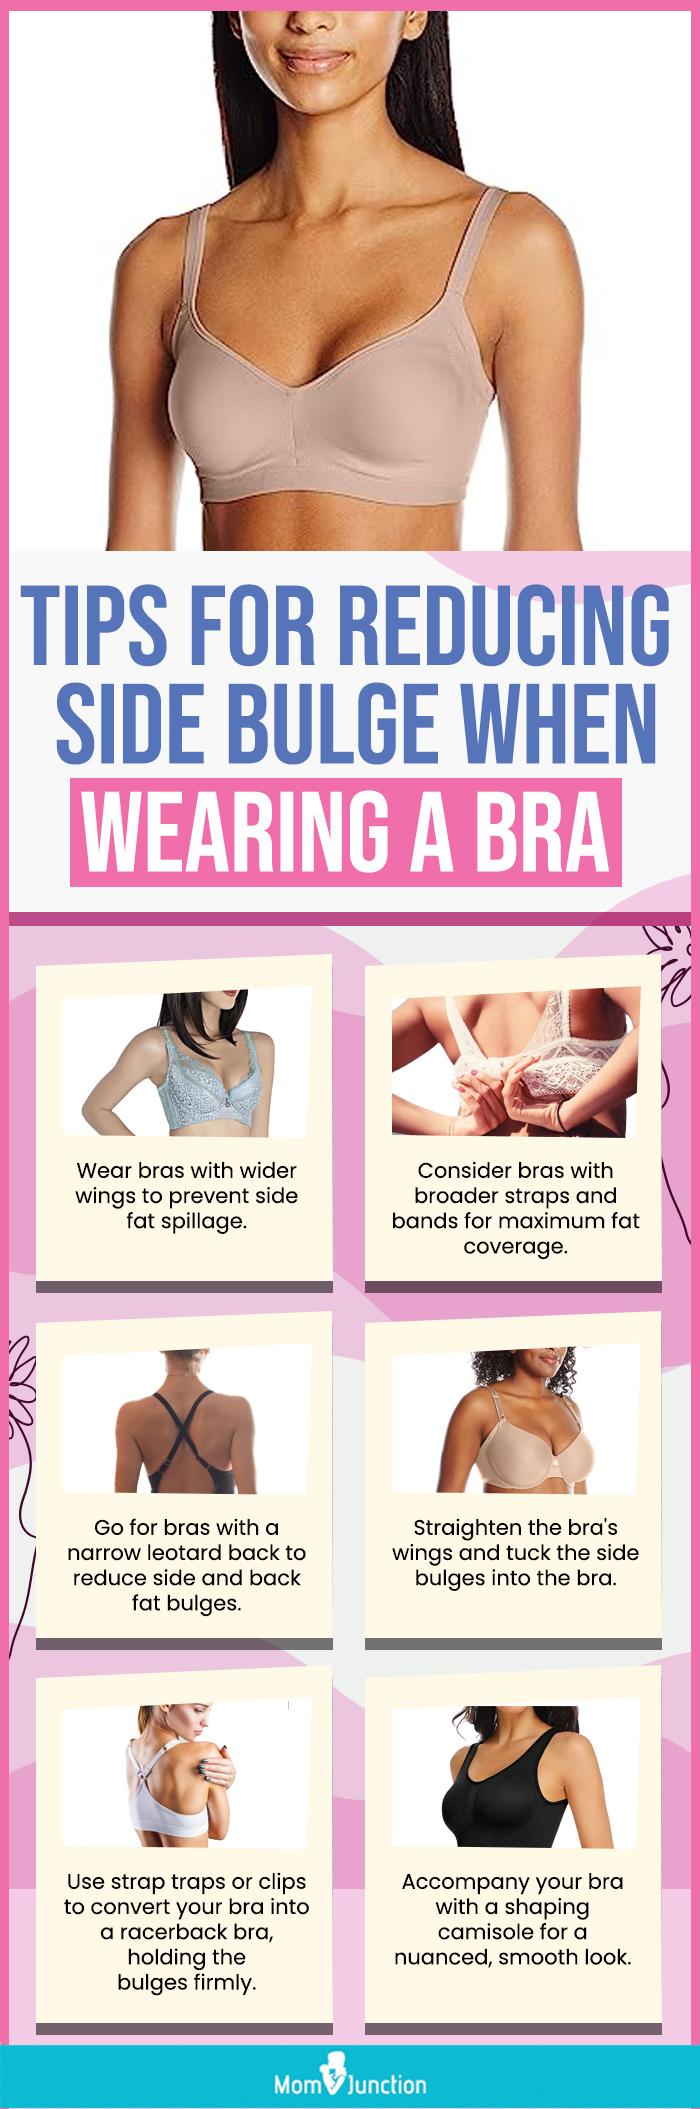 Health Effects of Not Wearing a Bra